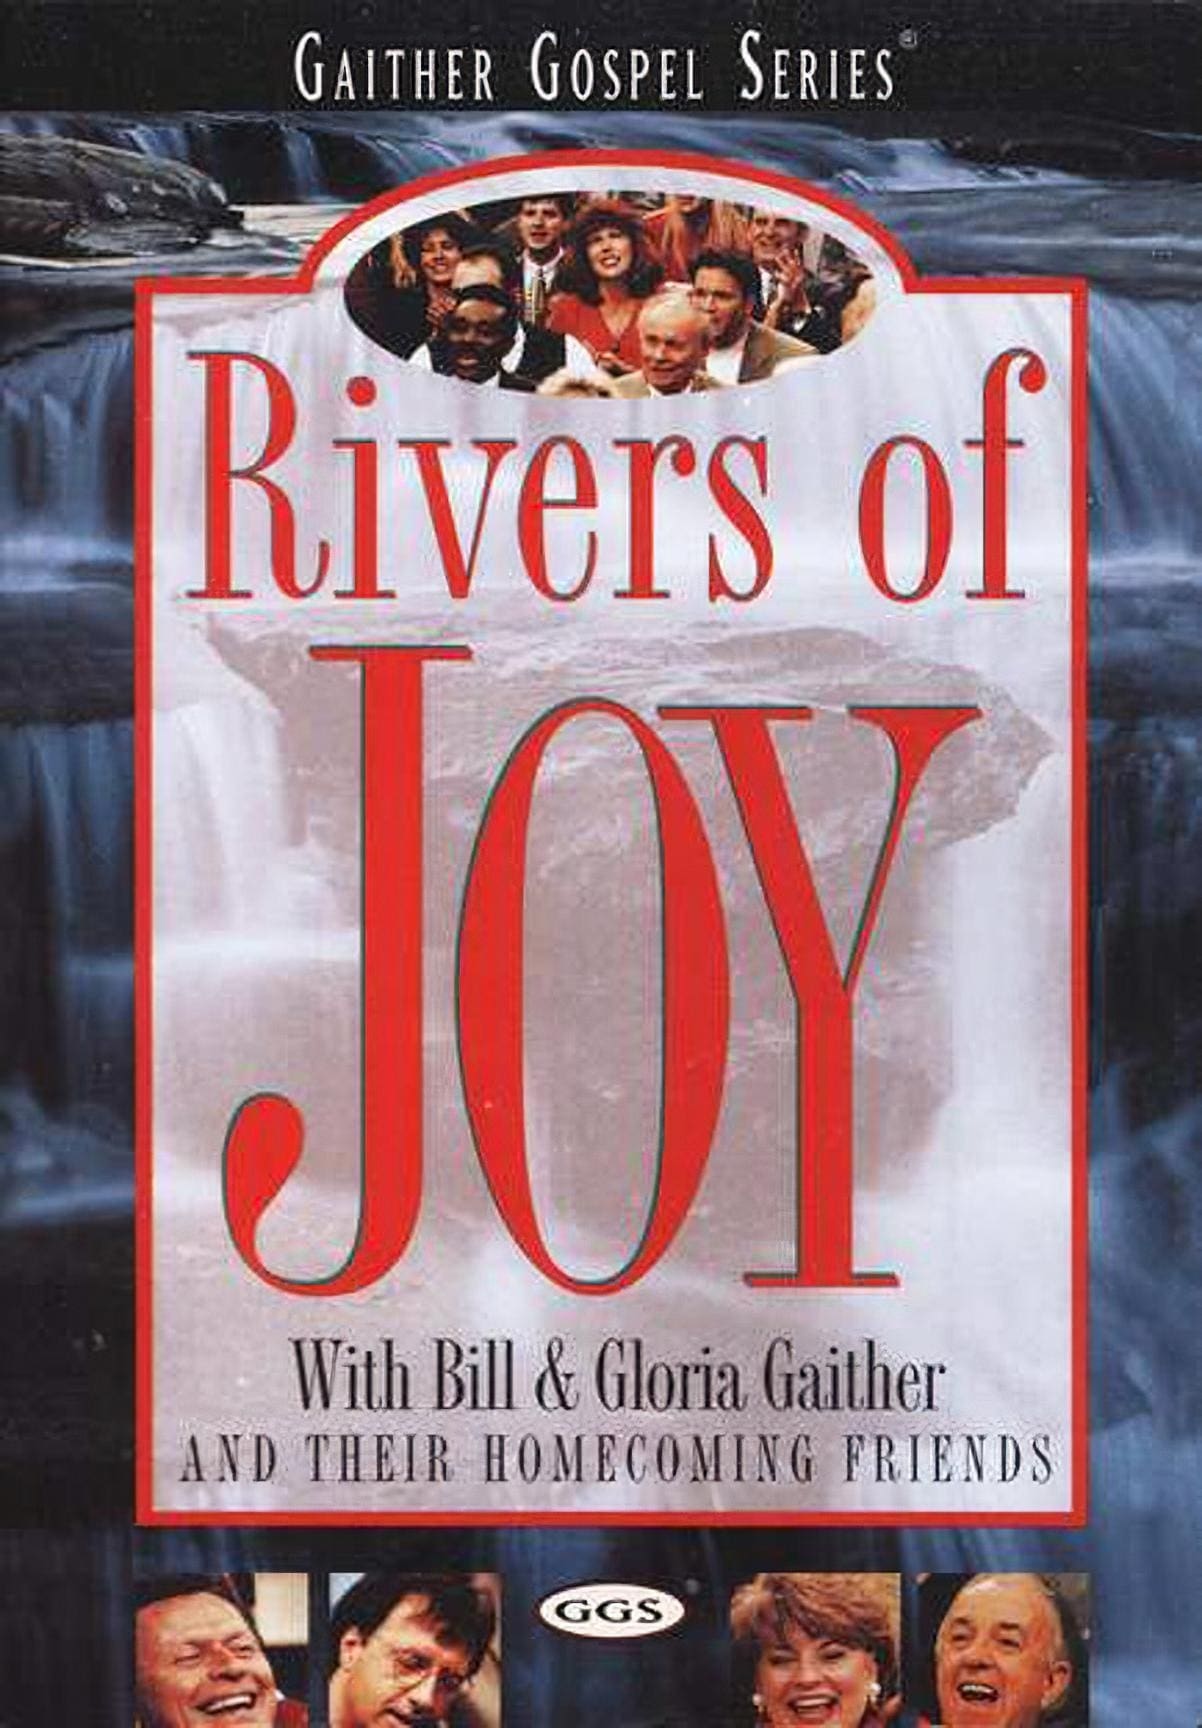 Rivers of Joy